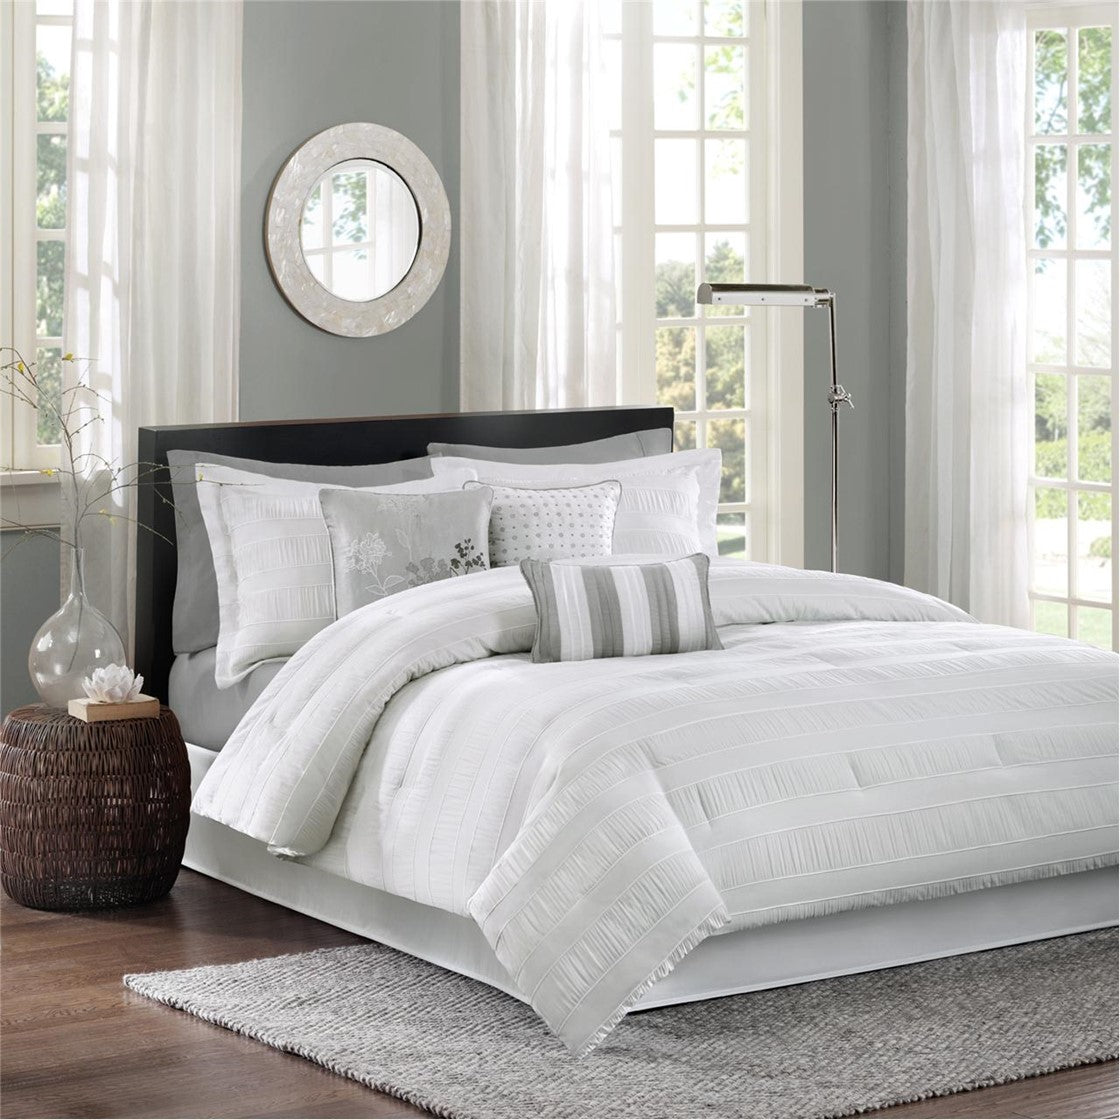 Madison Park Hampton 7 Piece Comforter Set - White - Cal King Size